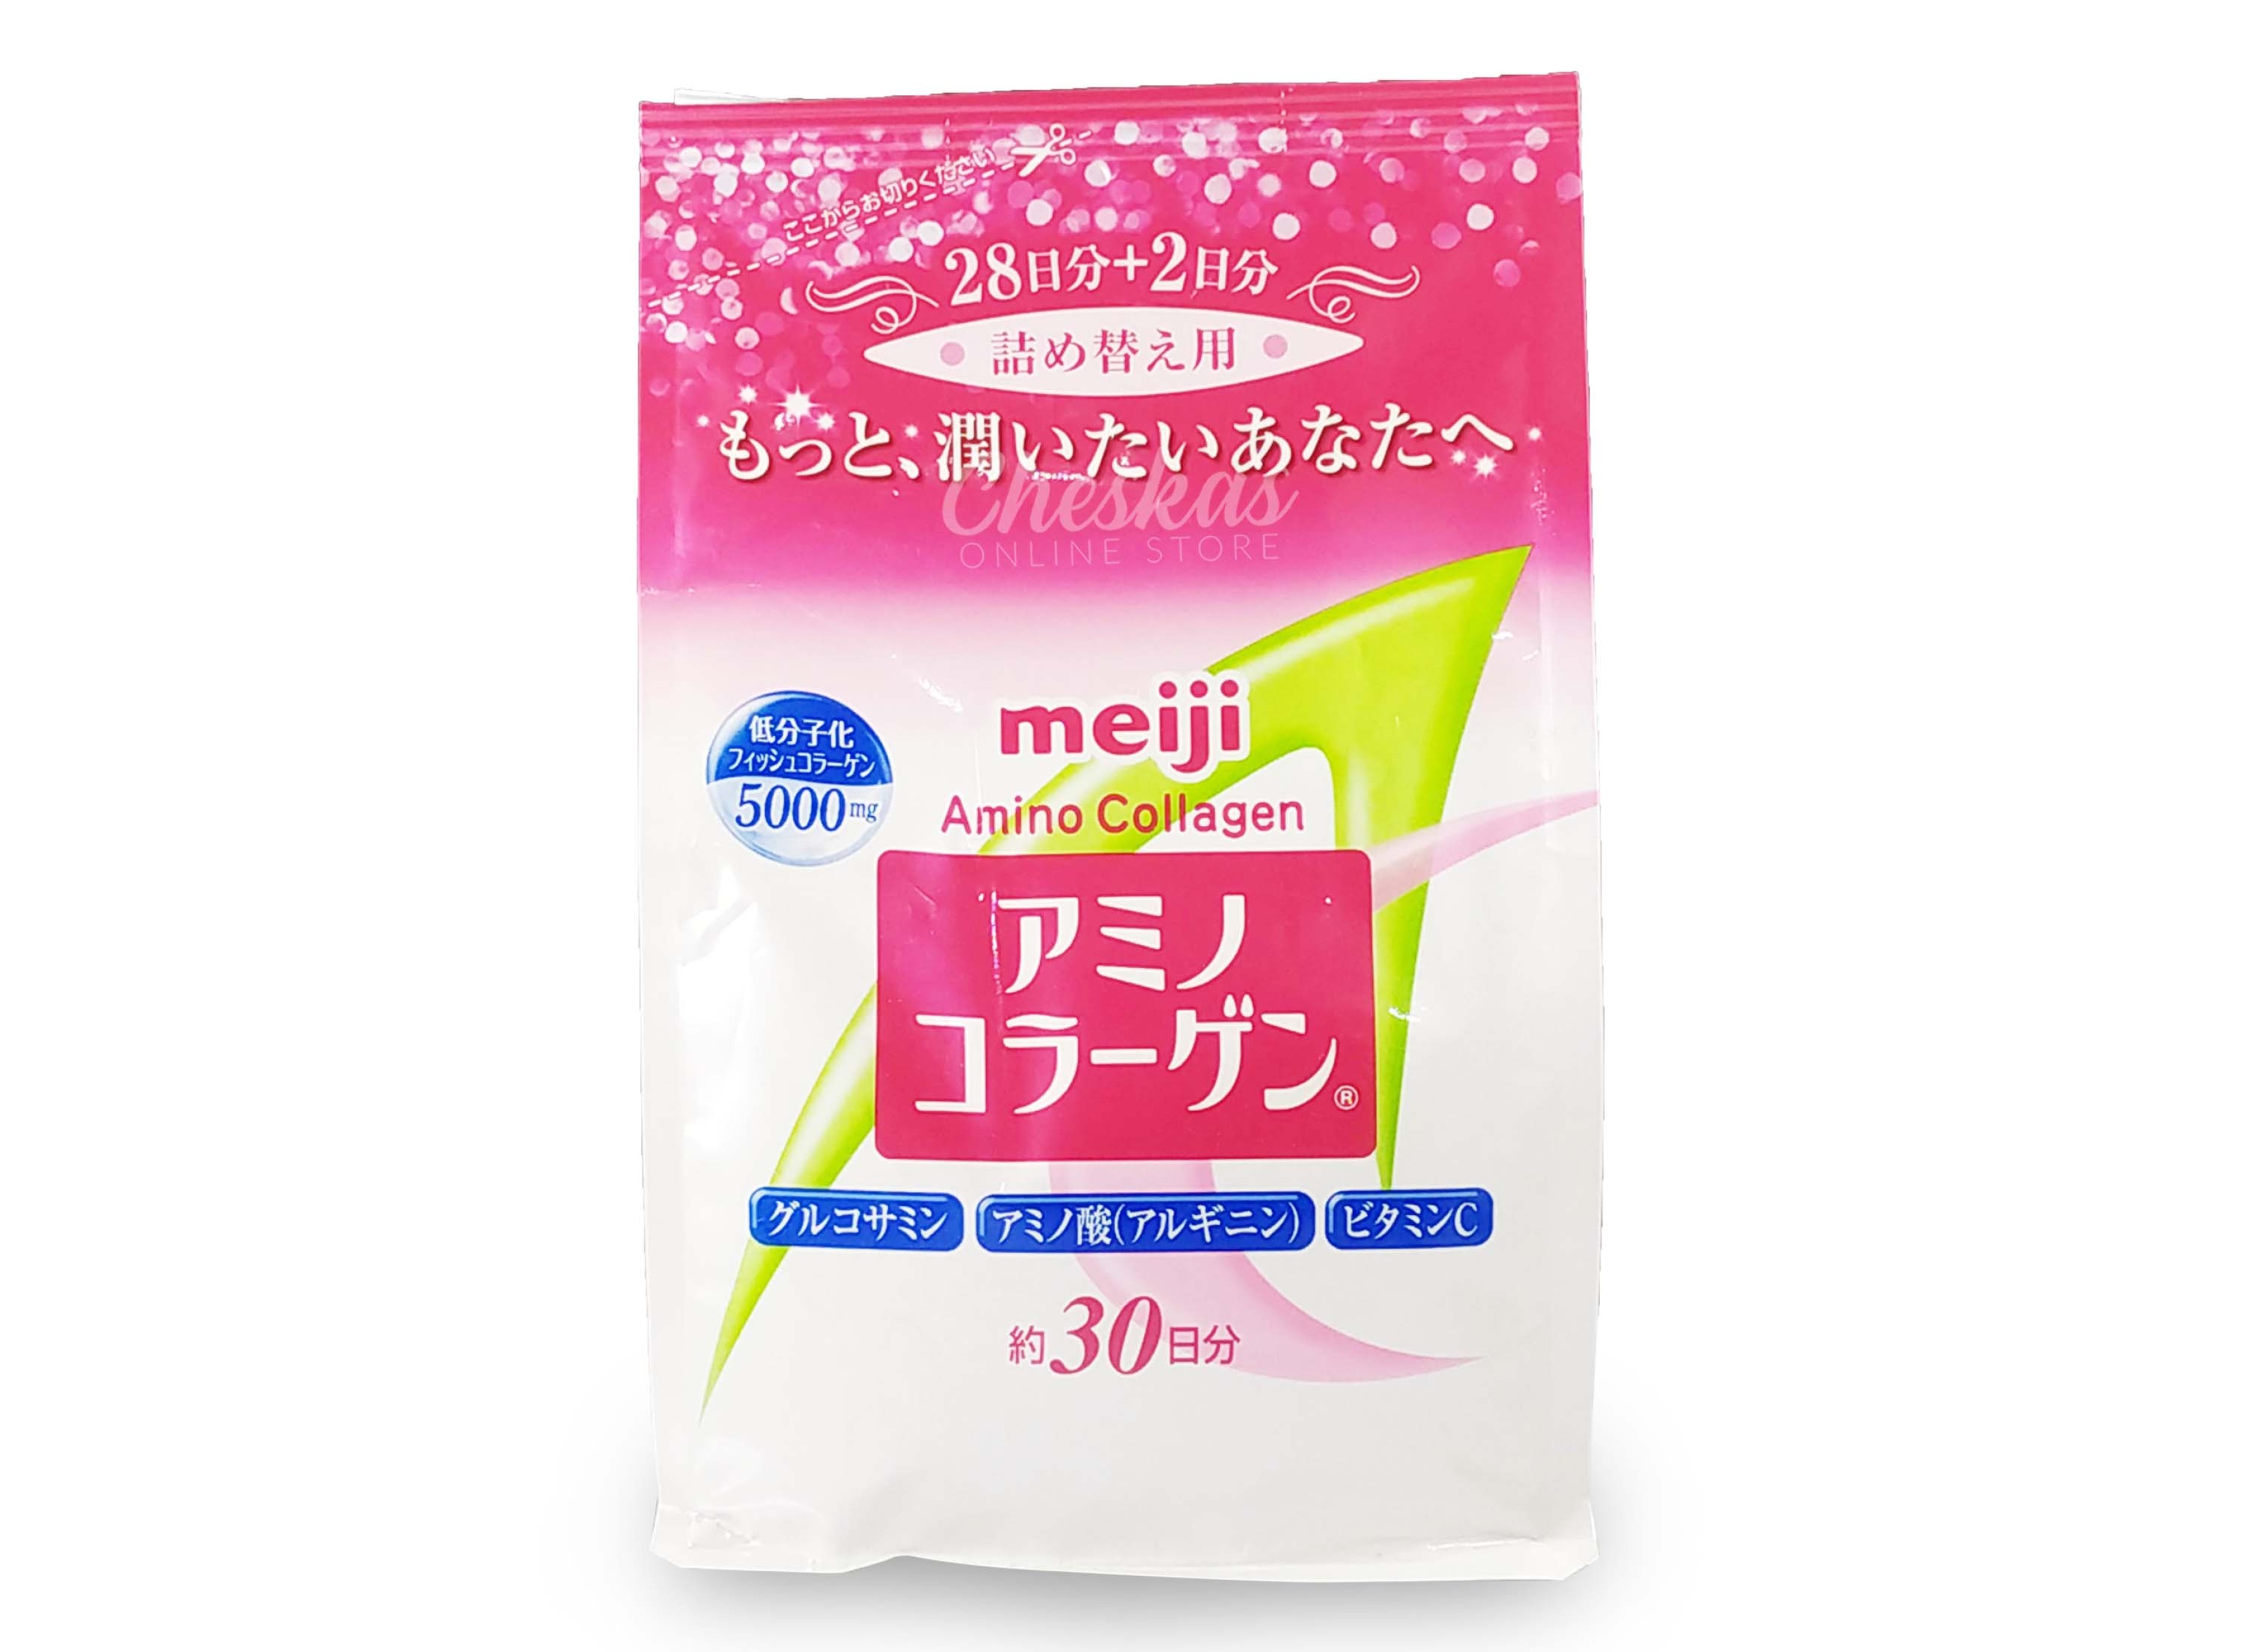 Meiji Amino Collagen Powder Regular Drink better than ivi